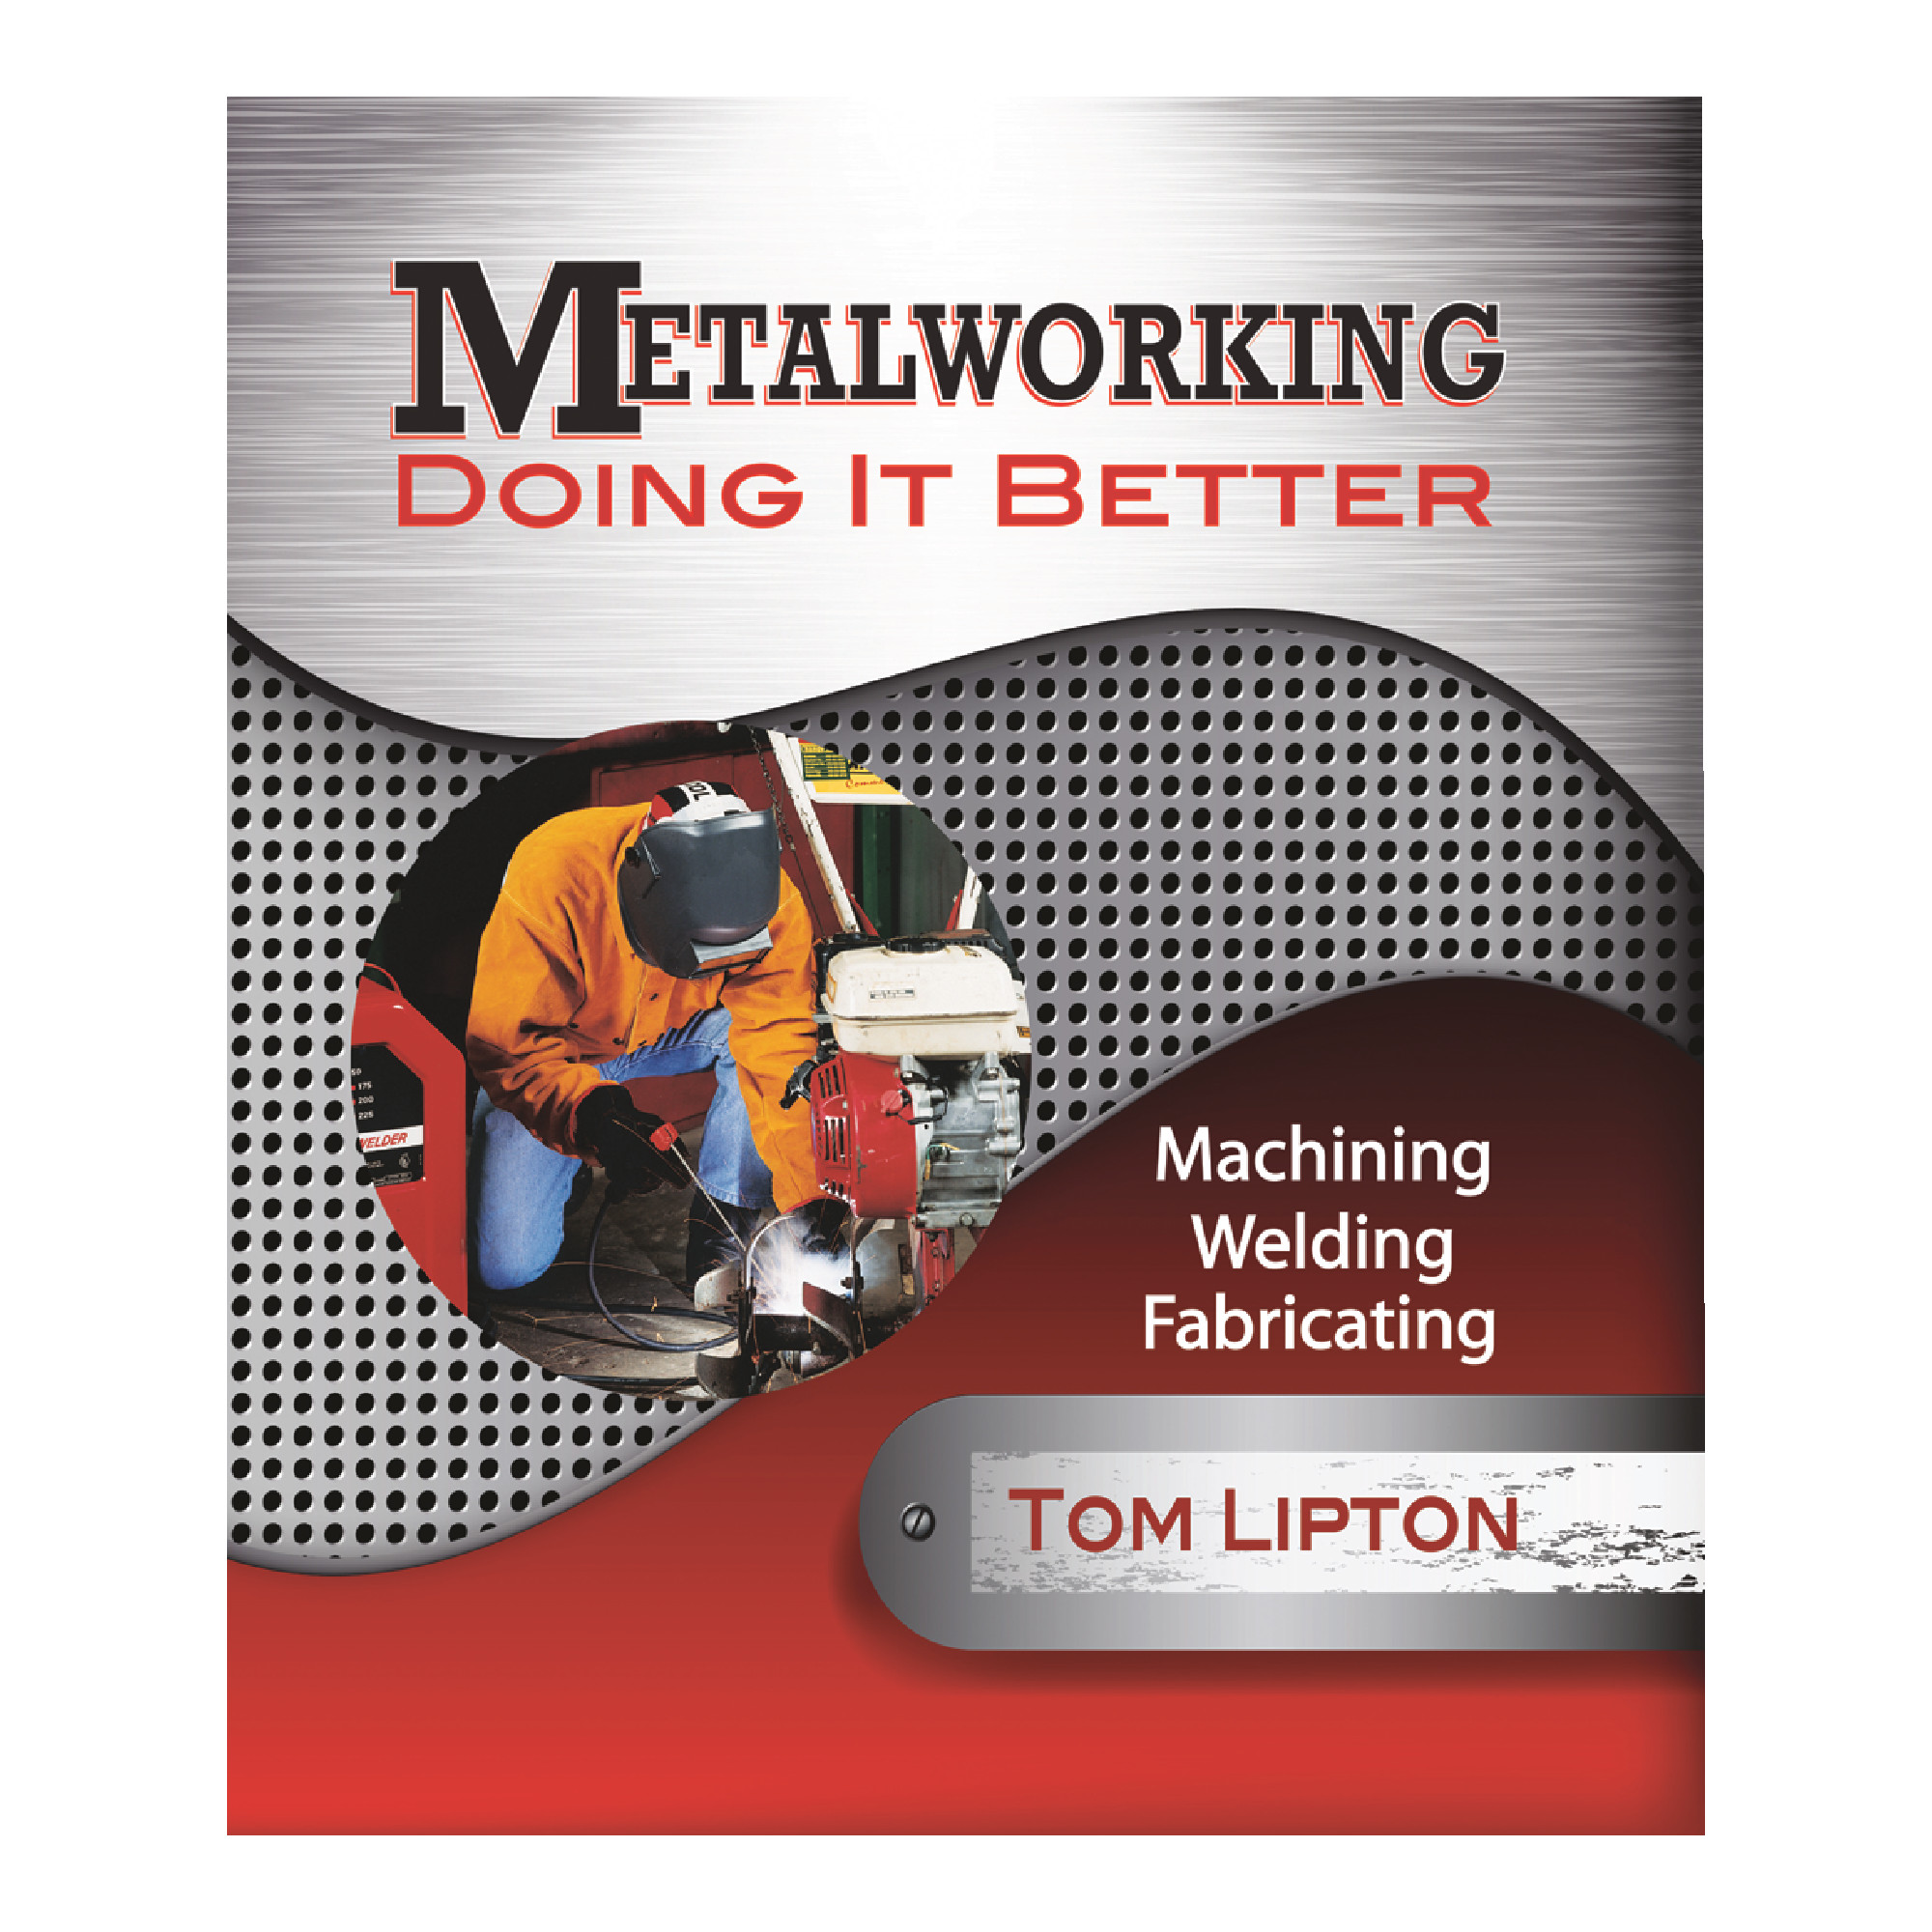 Metalworking-Doing it Better: Machining, Welding, Fabricating